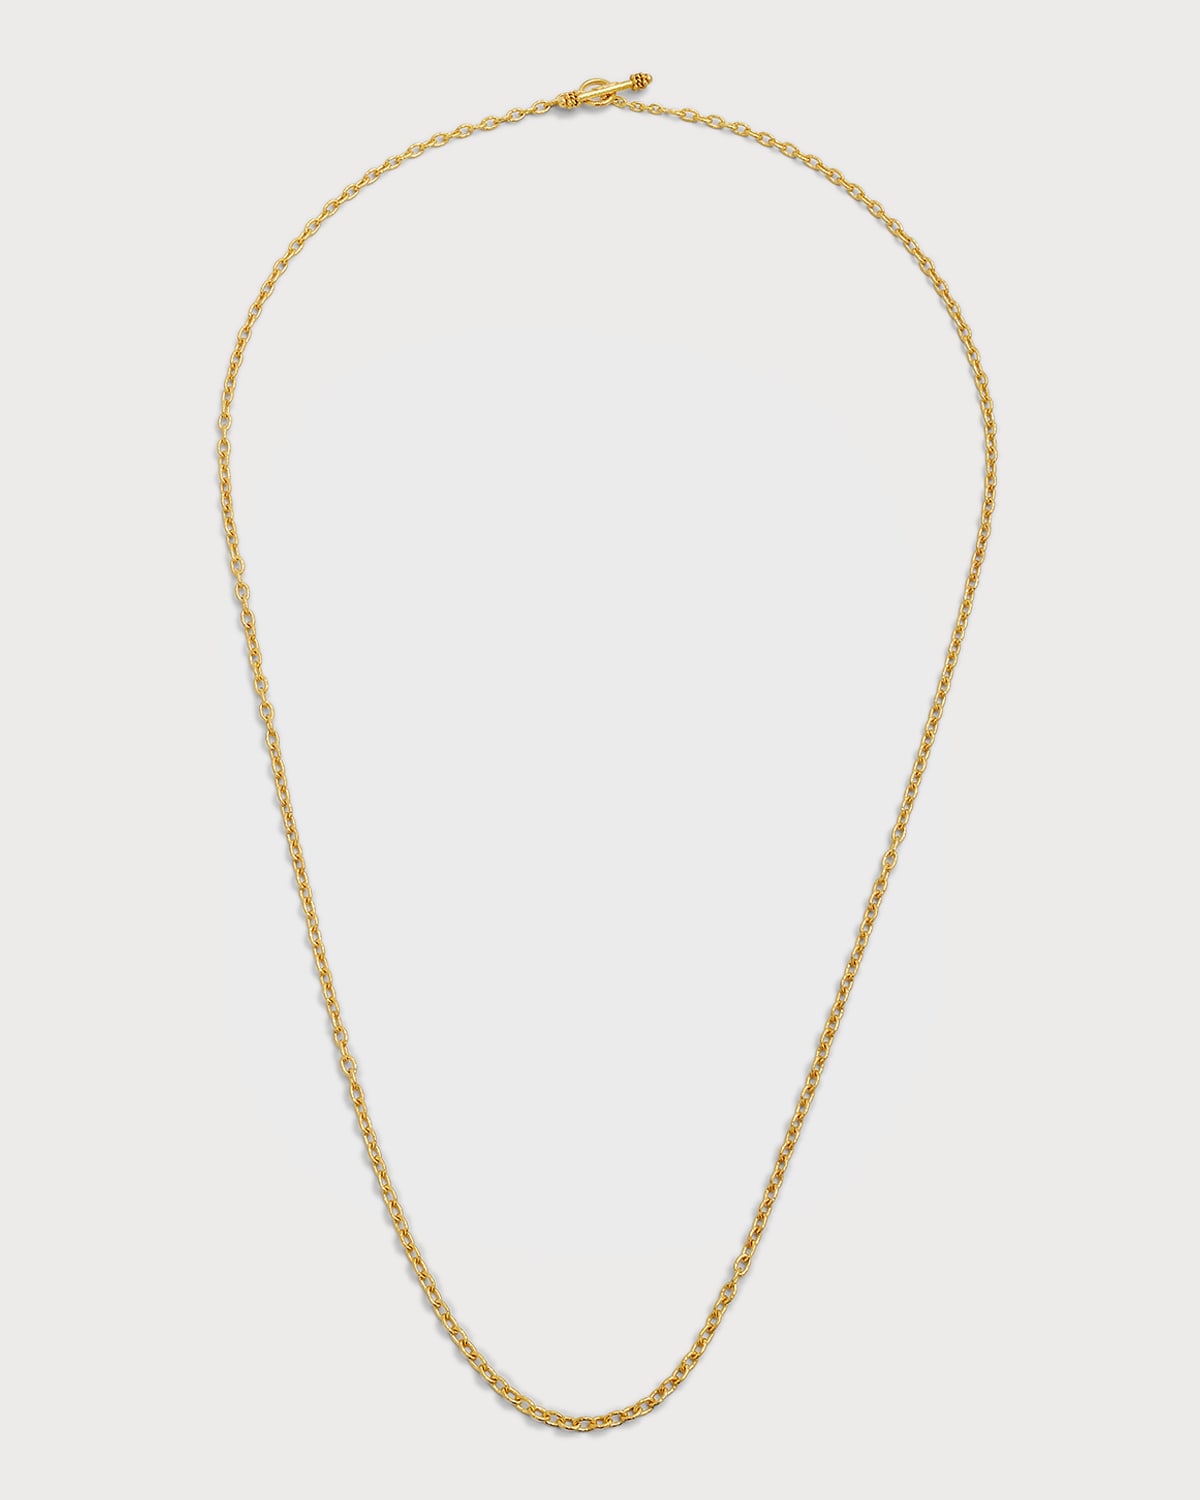 Elizabeth Locke Handmade Gold Chain 19k, 35"L